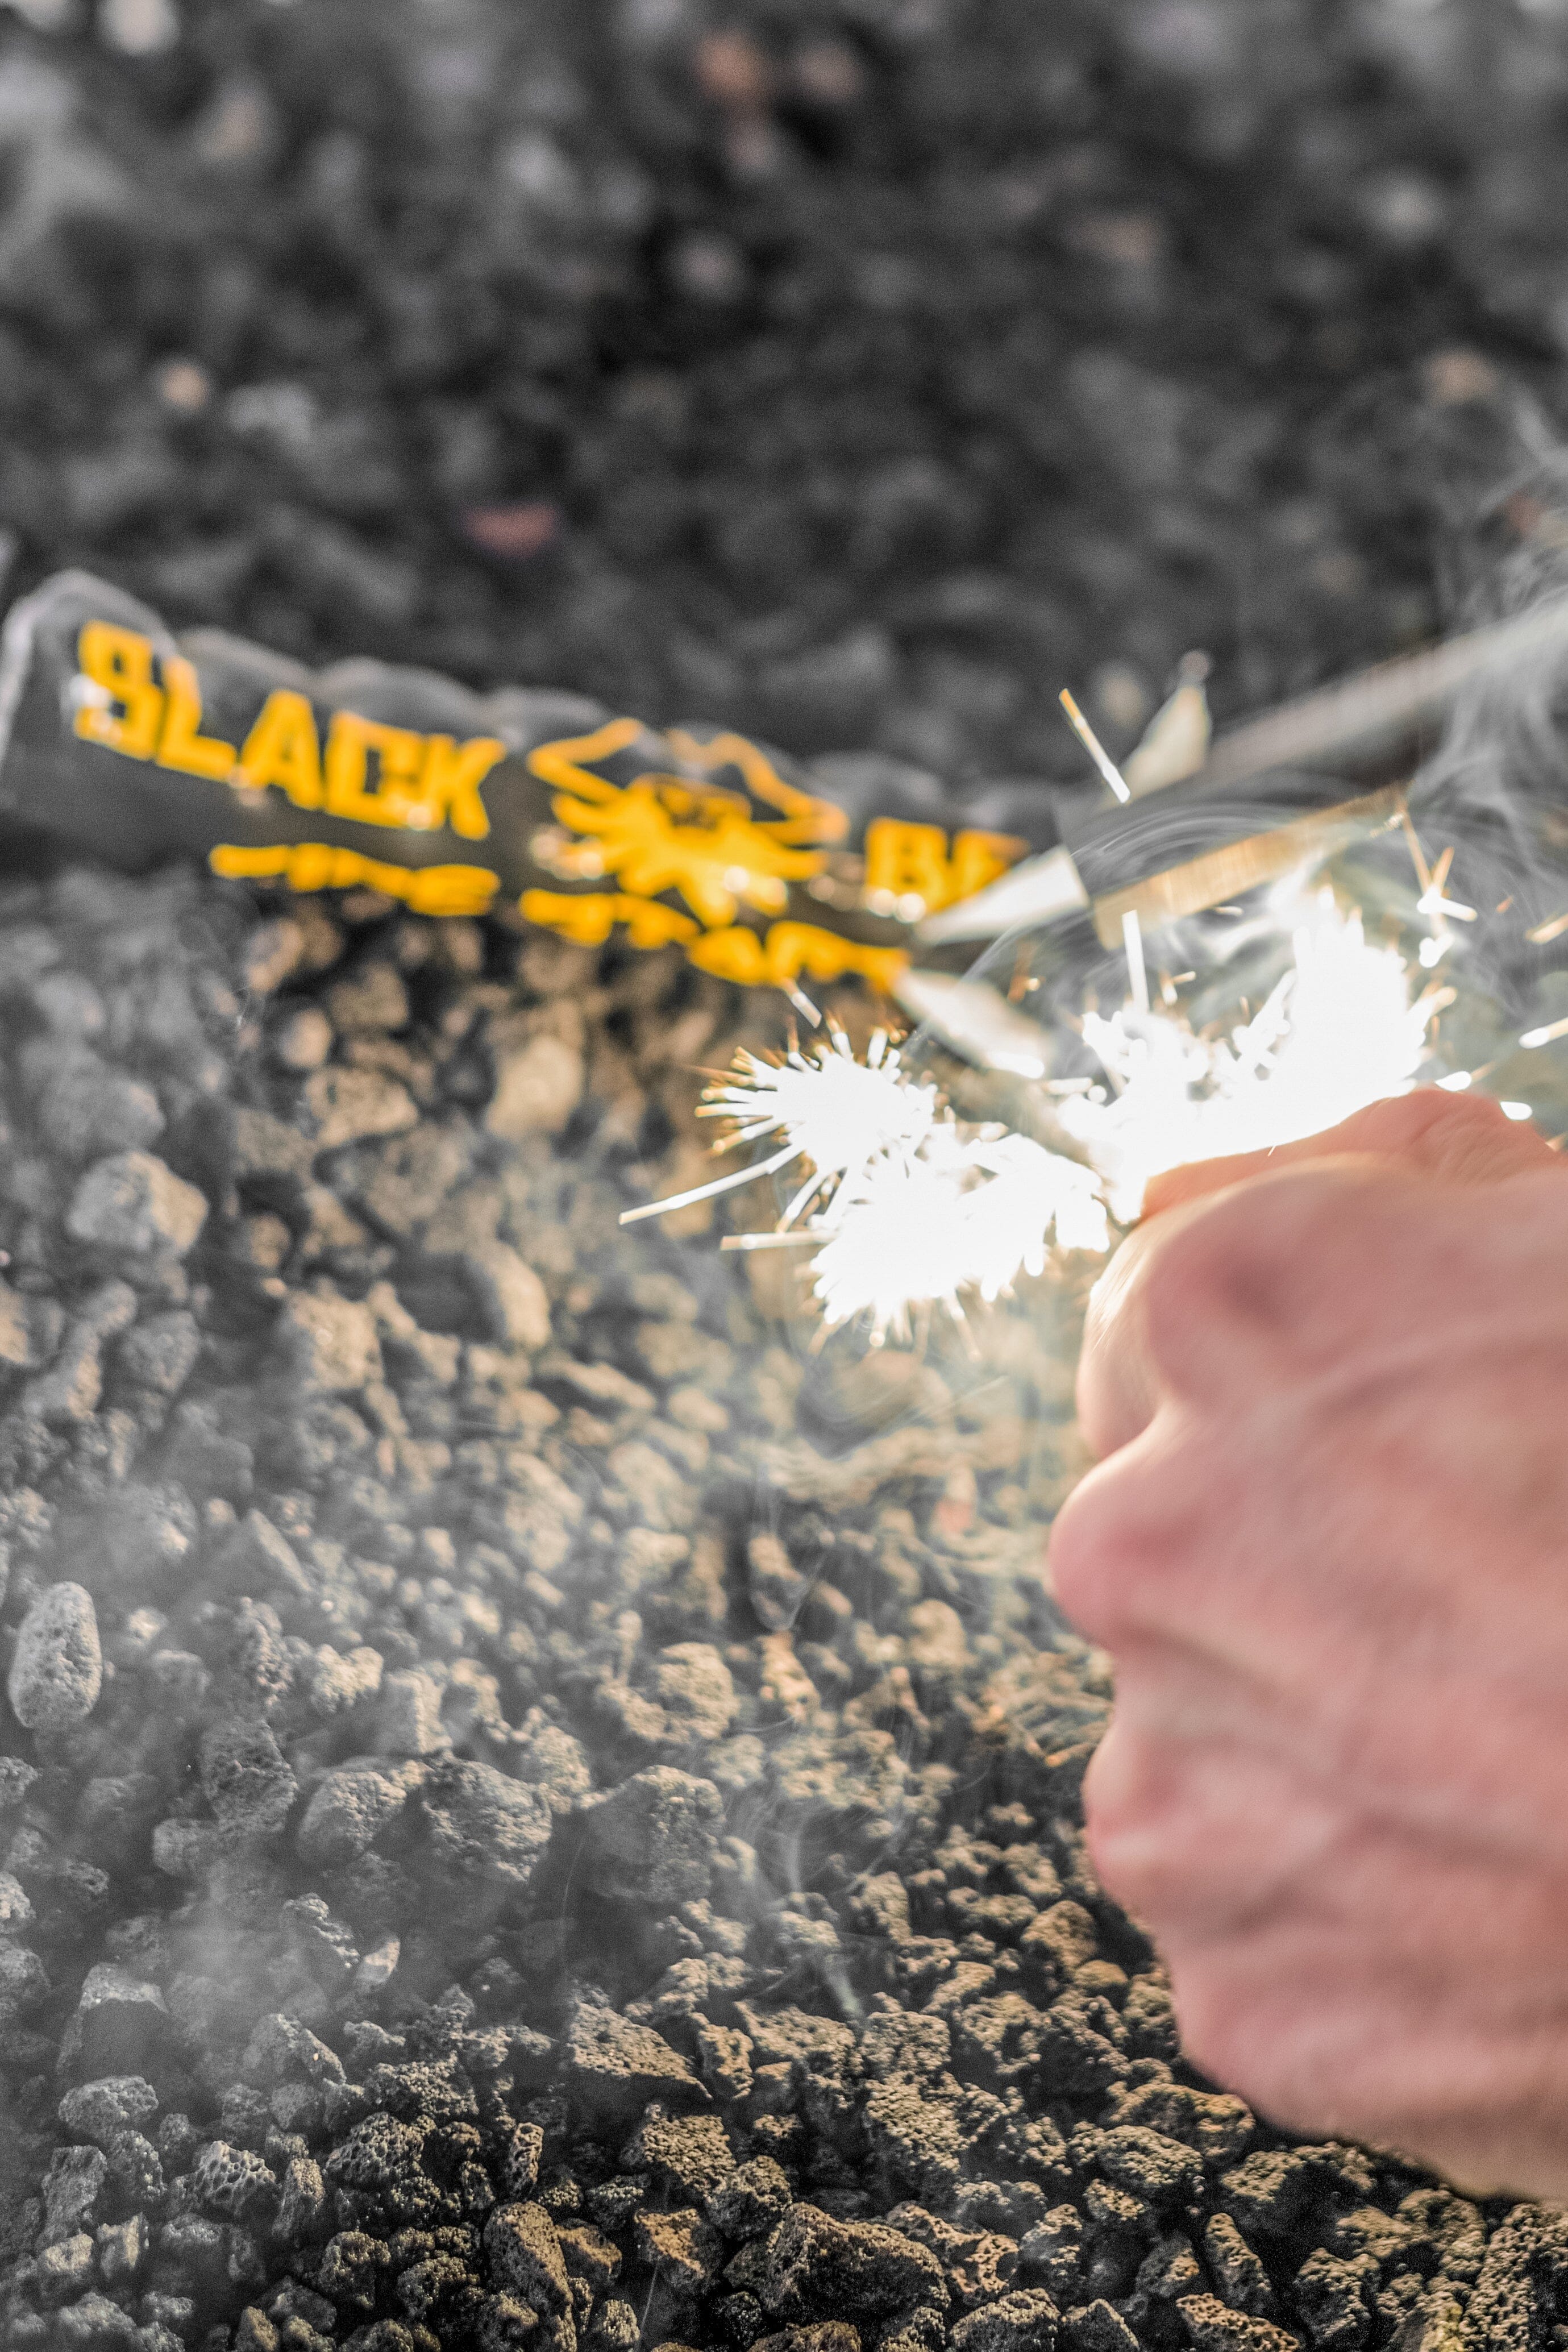 Black beard fire starter being ignited with ferro rod